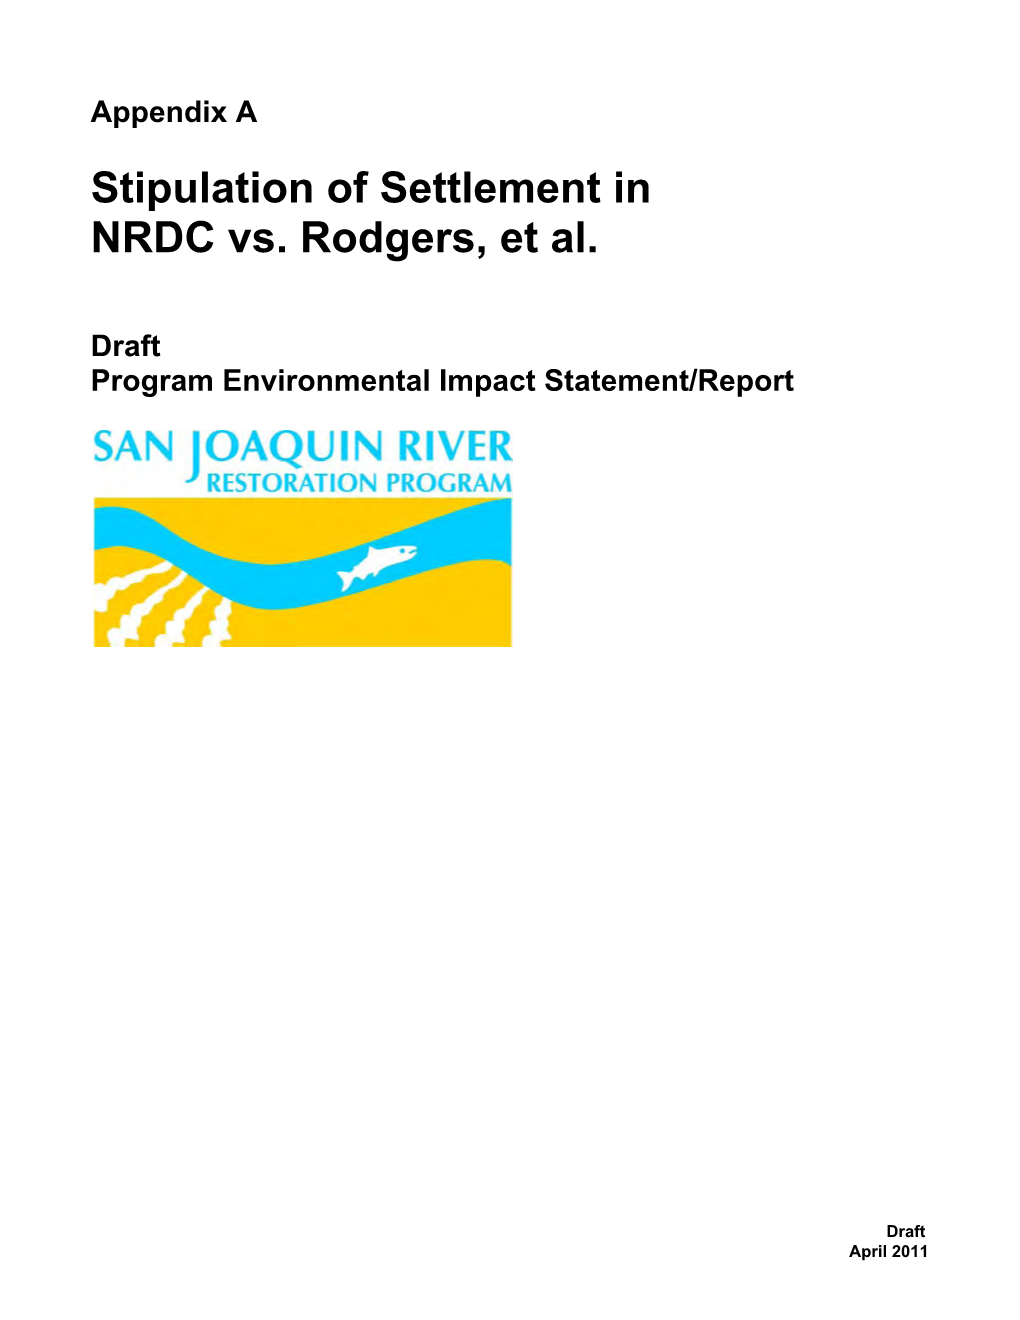 Stipulation of Settlement in NRDC Vs. Rodgers, Et Al